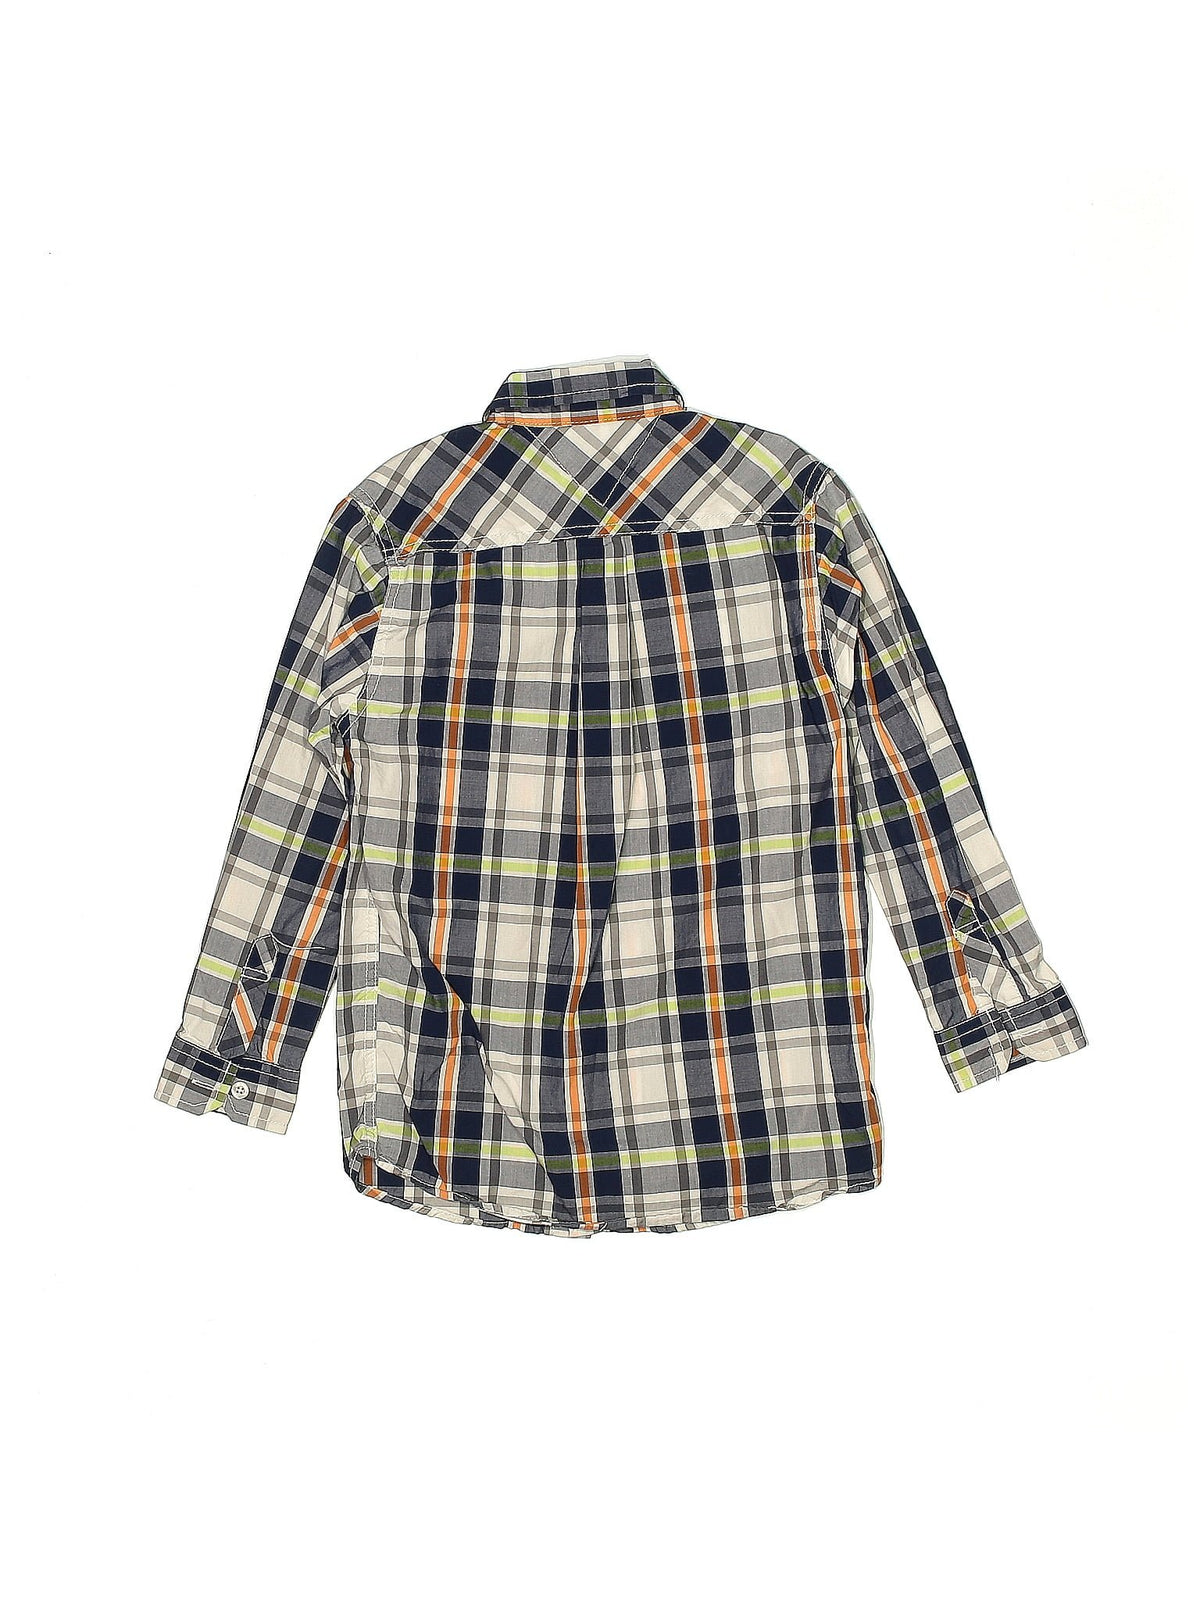 Long Sleeve Button Down Shirt size - 6